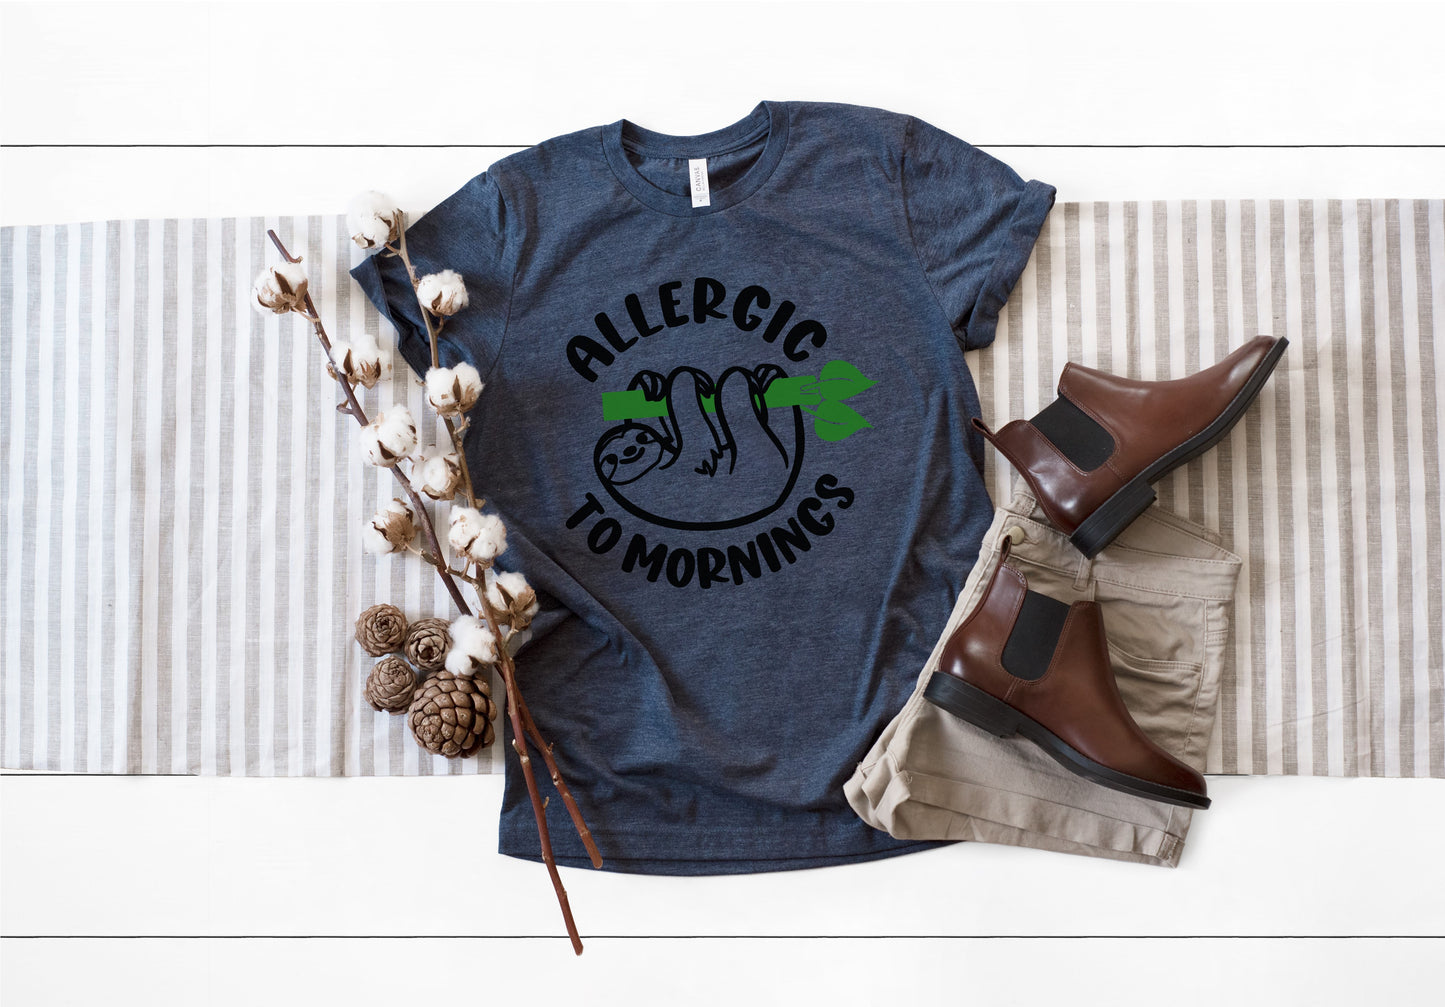 Fun, custom "Allergic to Mornings" T-shirt